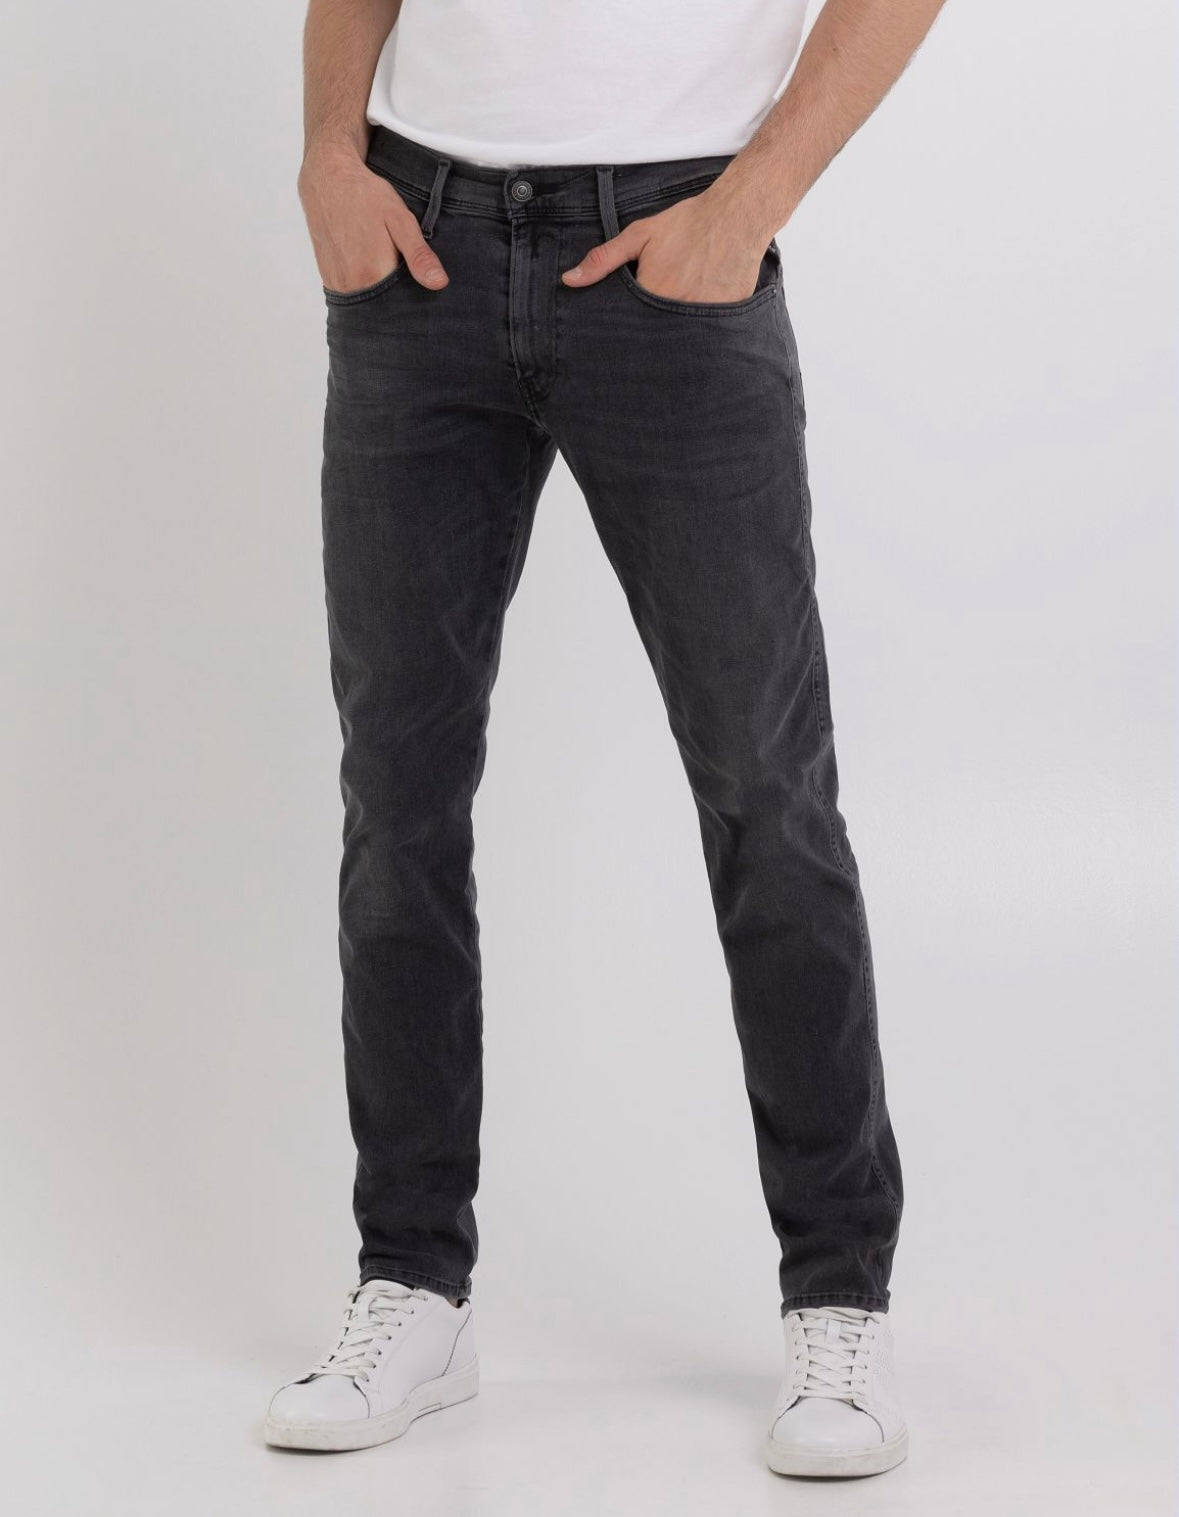 Replay Hyperflex Anbass jeans - 661 0RB2 097